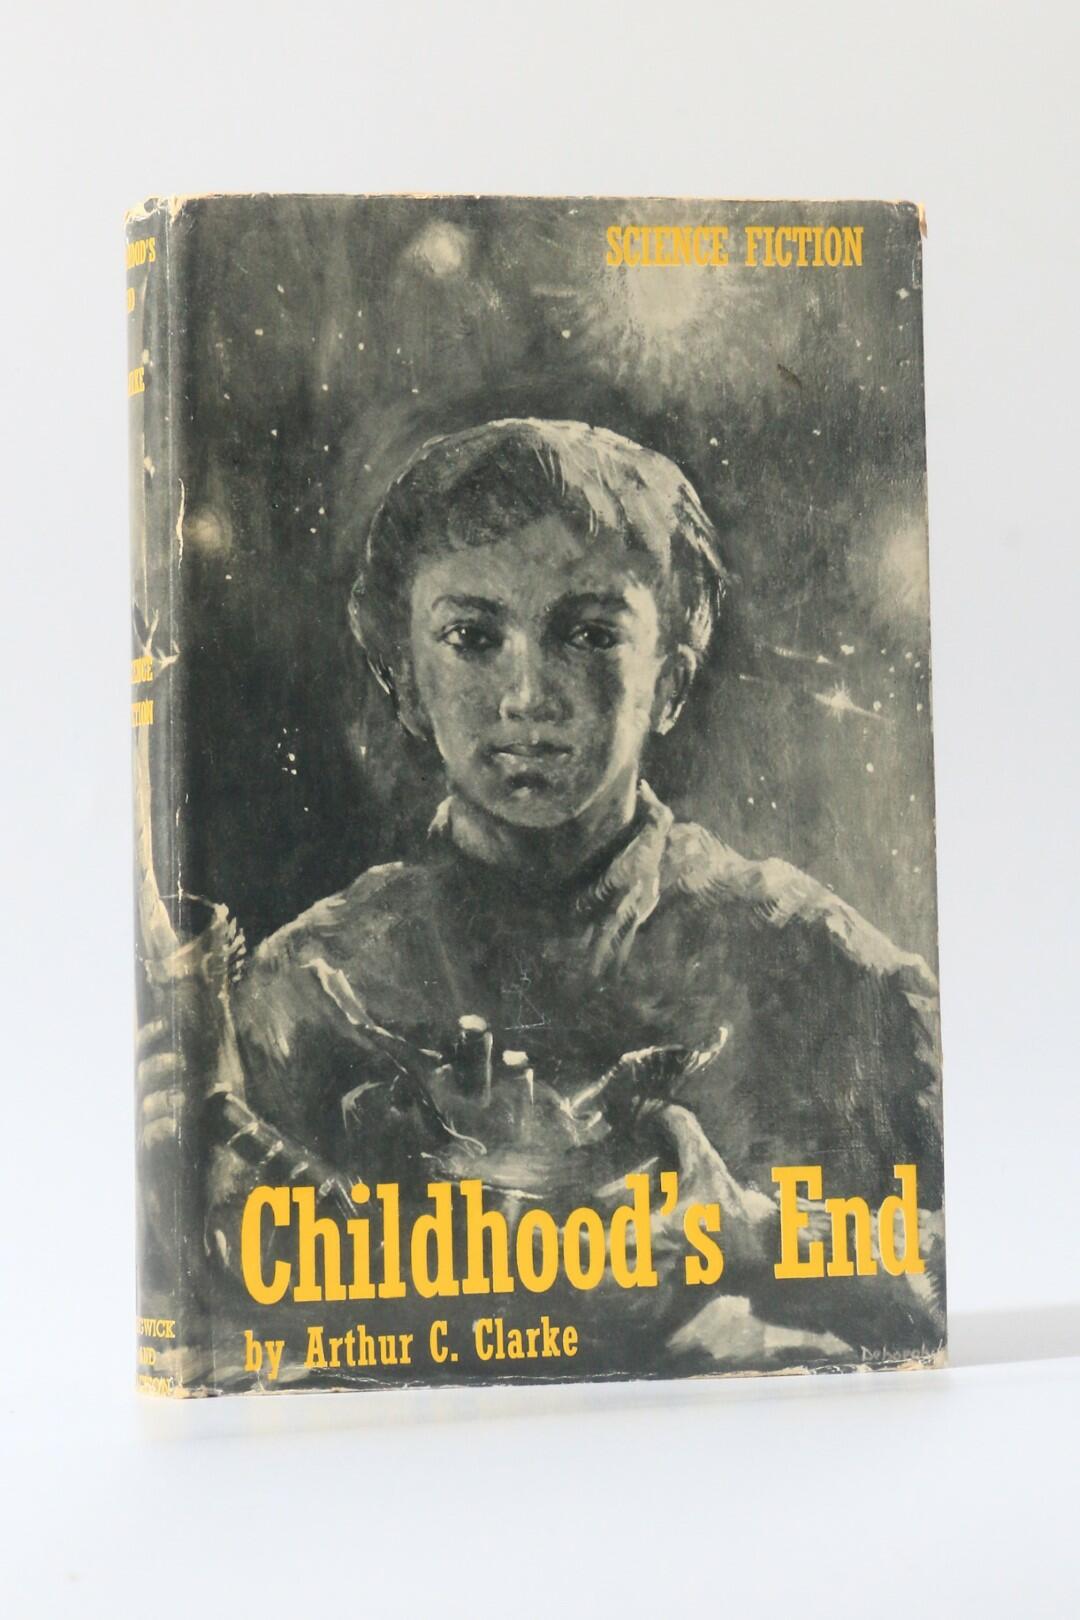 Arthur C. Clarke - Childhood's End - Sidgwick & Jackson, 1954, First Edition.